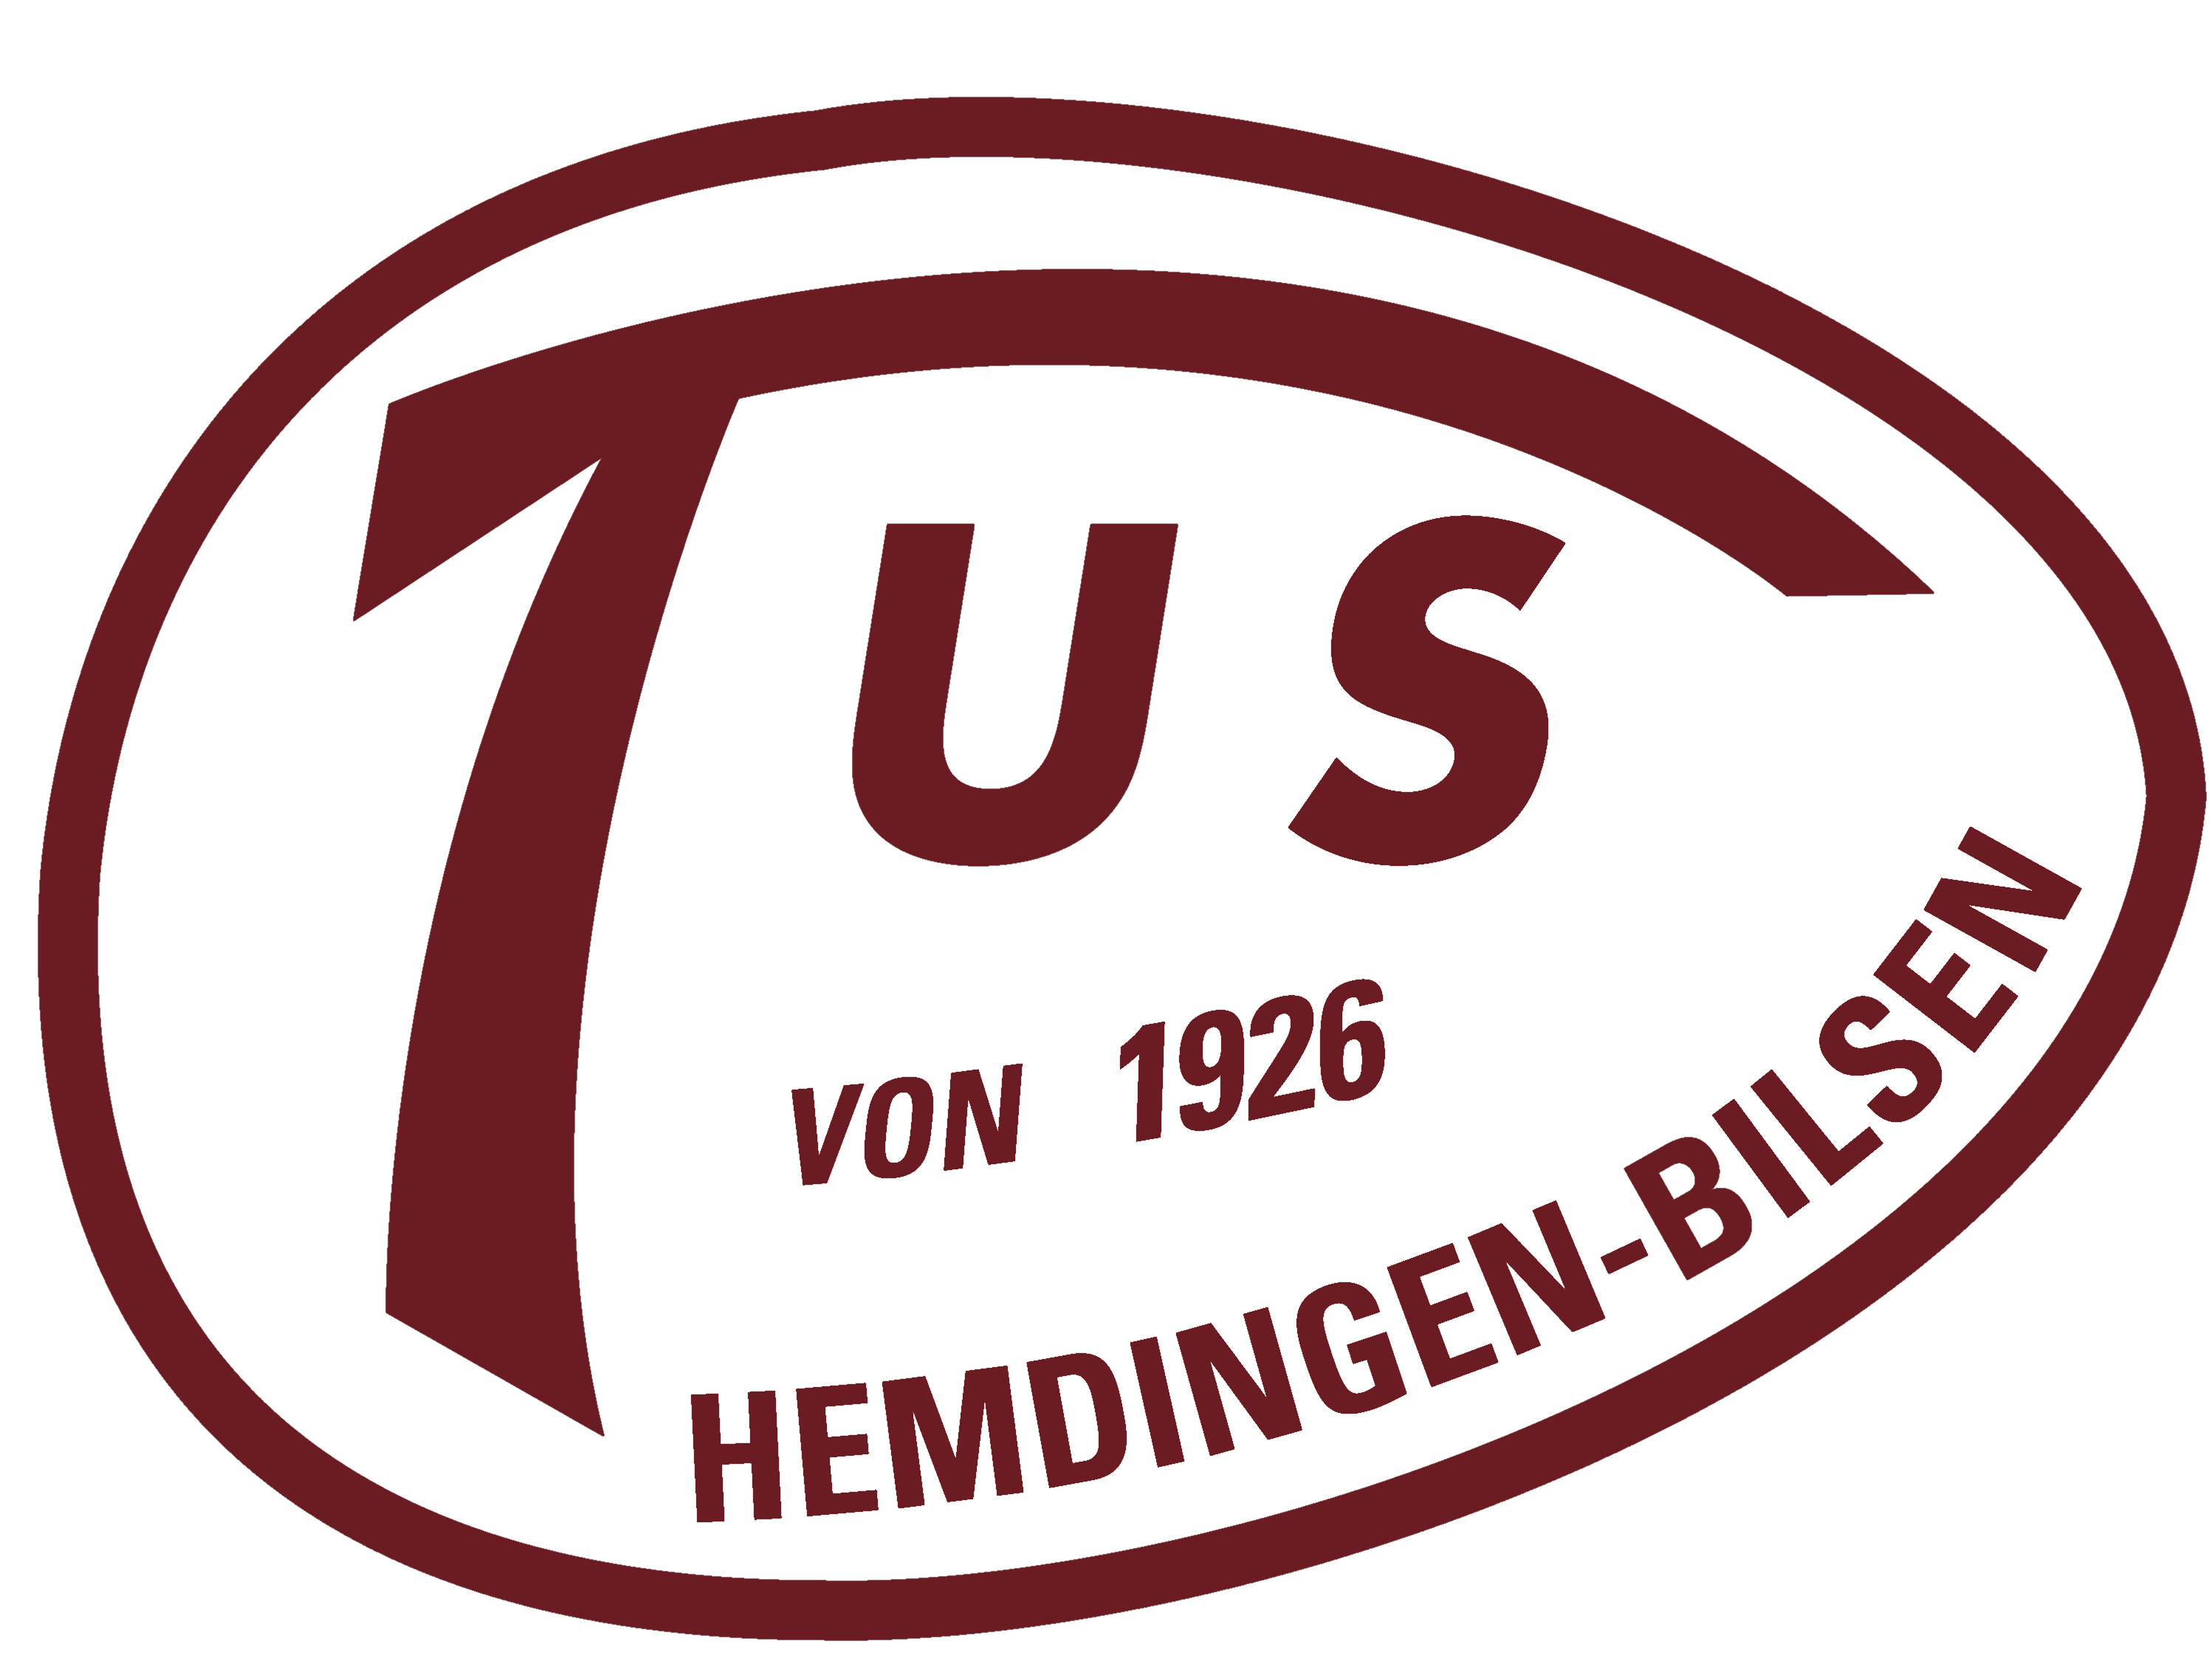 TuS Hemdingen-Bilsen von 1926 e.V.